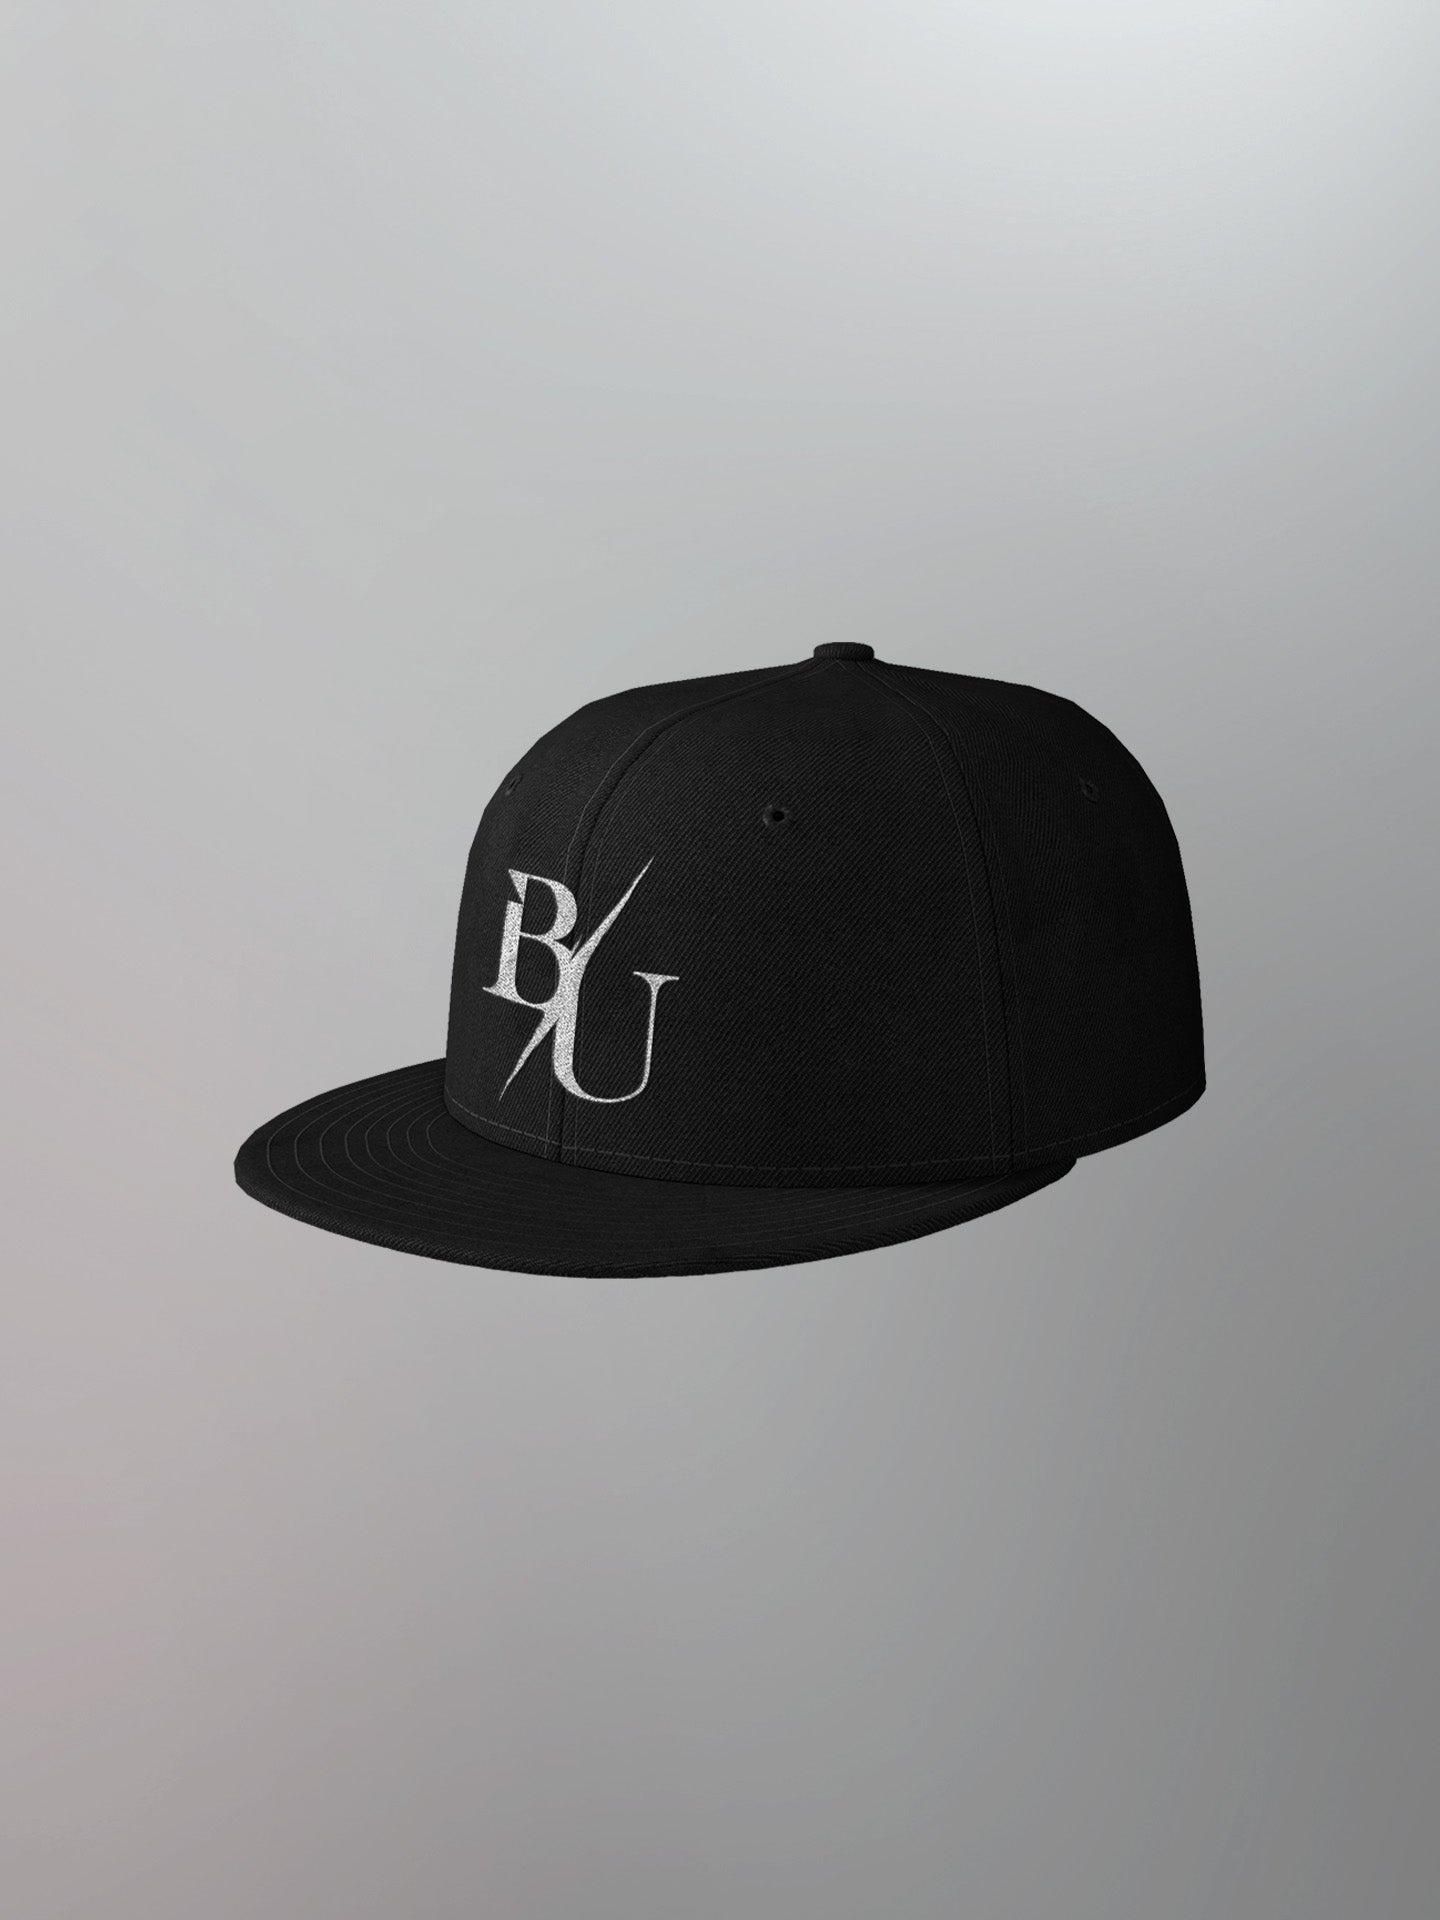 Beyond Unbroken - Logo Snapback Hat